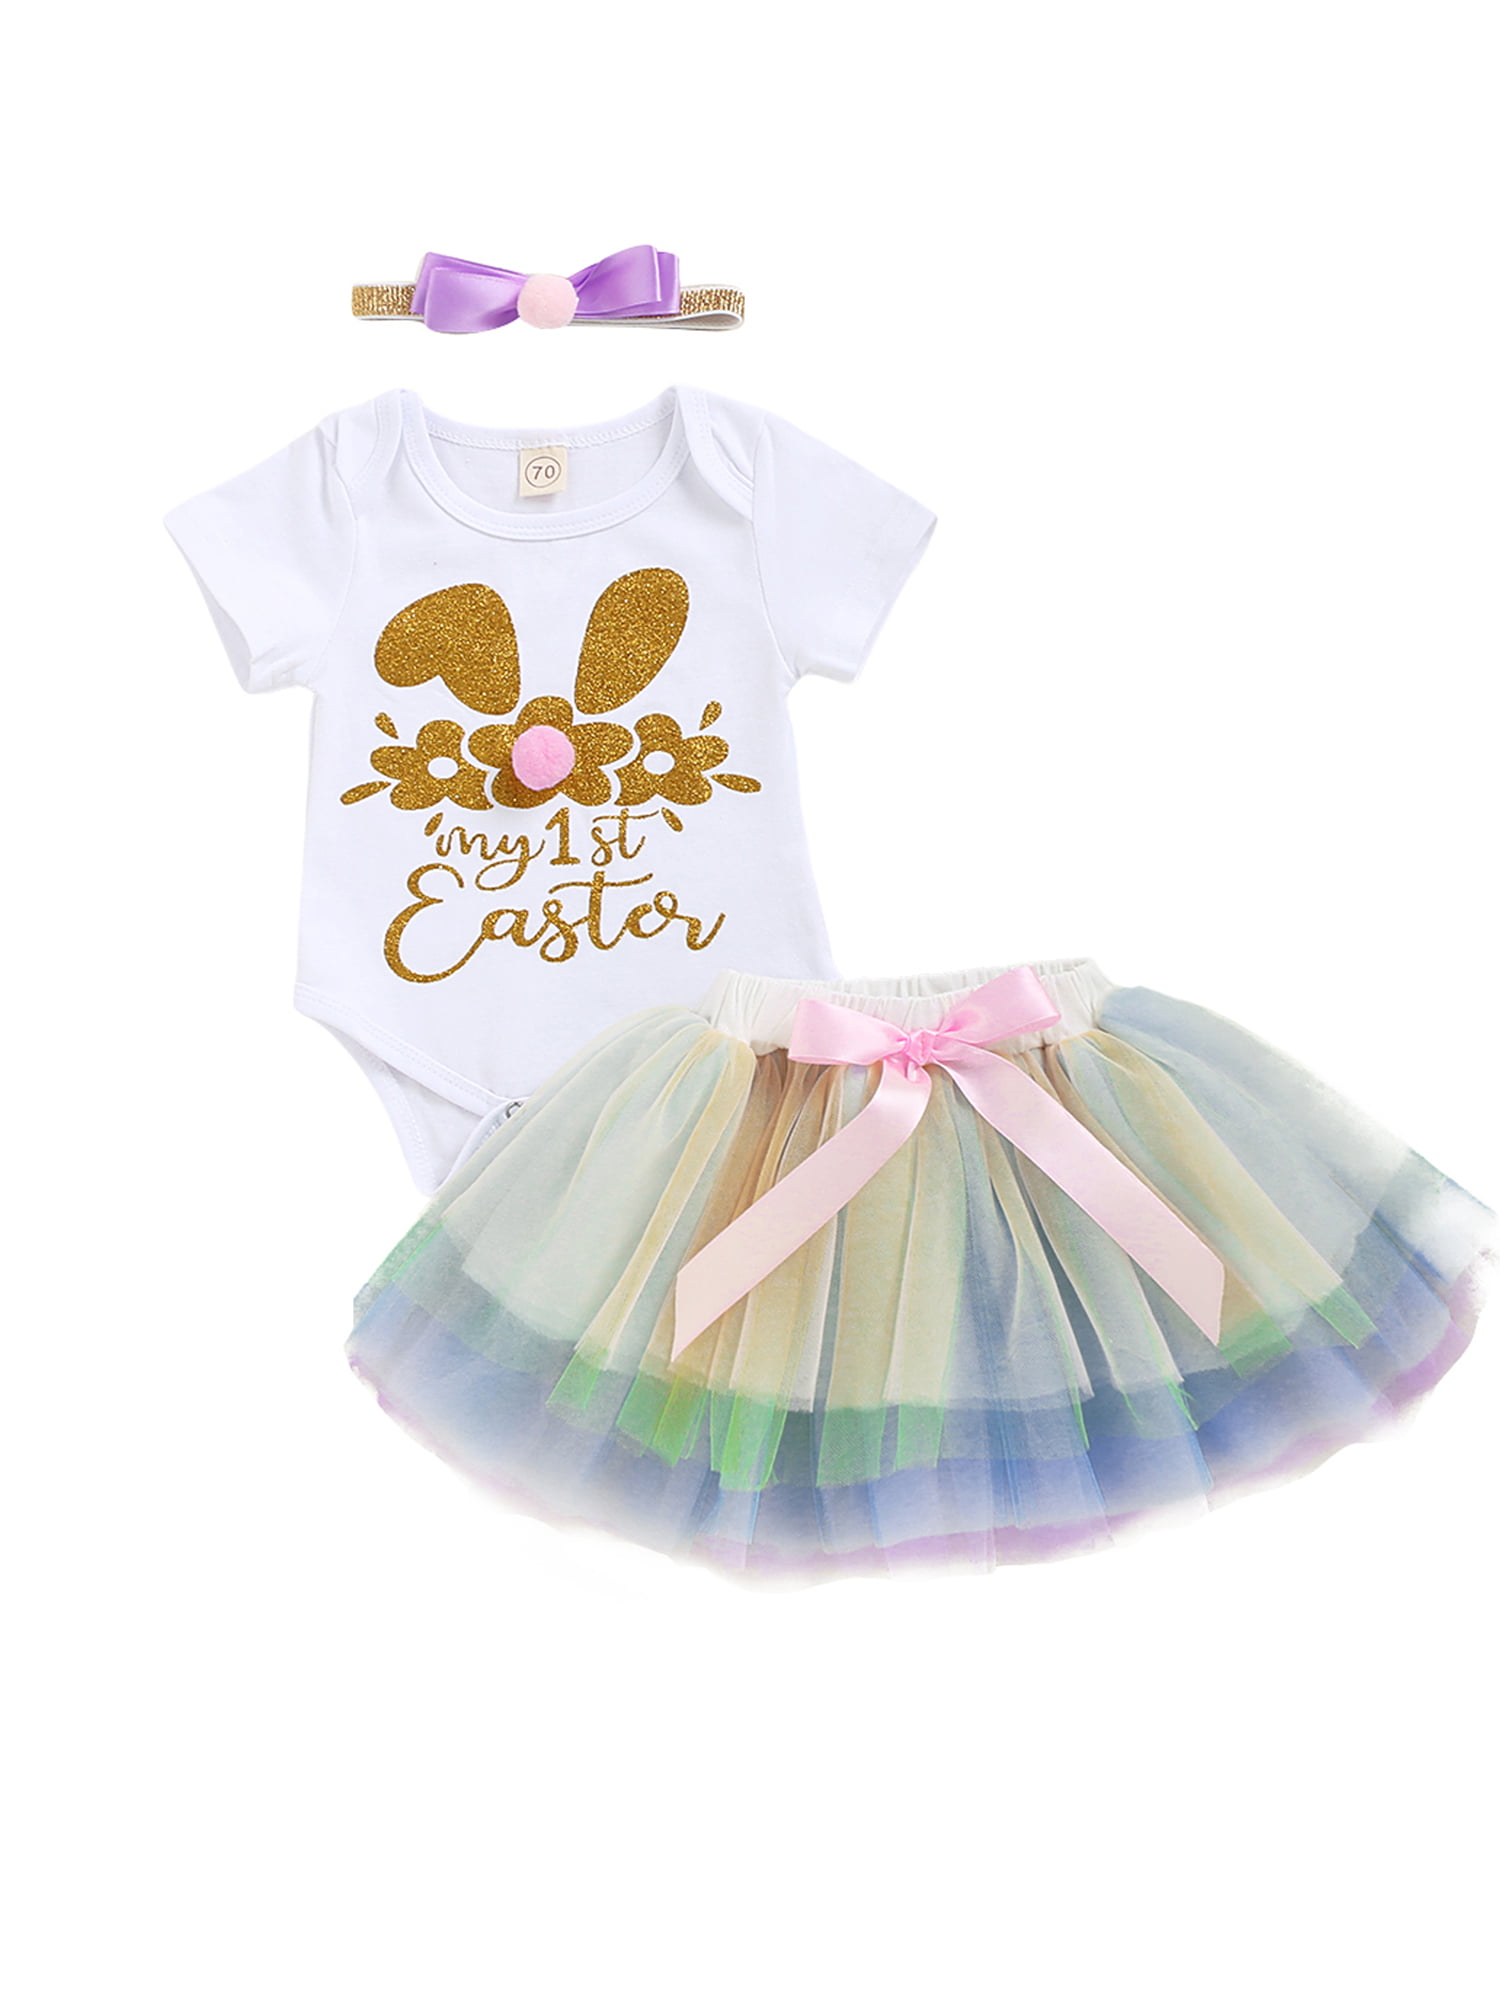 Details about   3PCS Newborn Baby Girl Clothes Romper Bodysuit+Tutu Skirt+Headband Outfit Set 